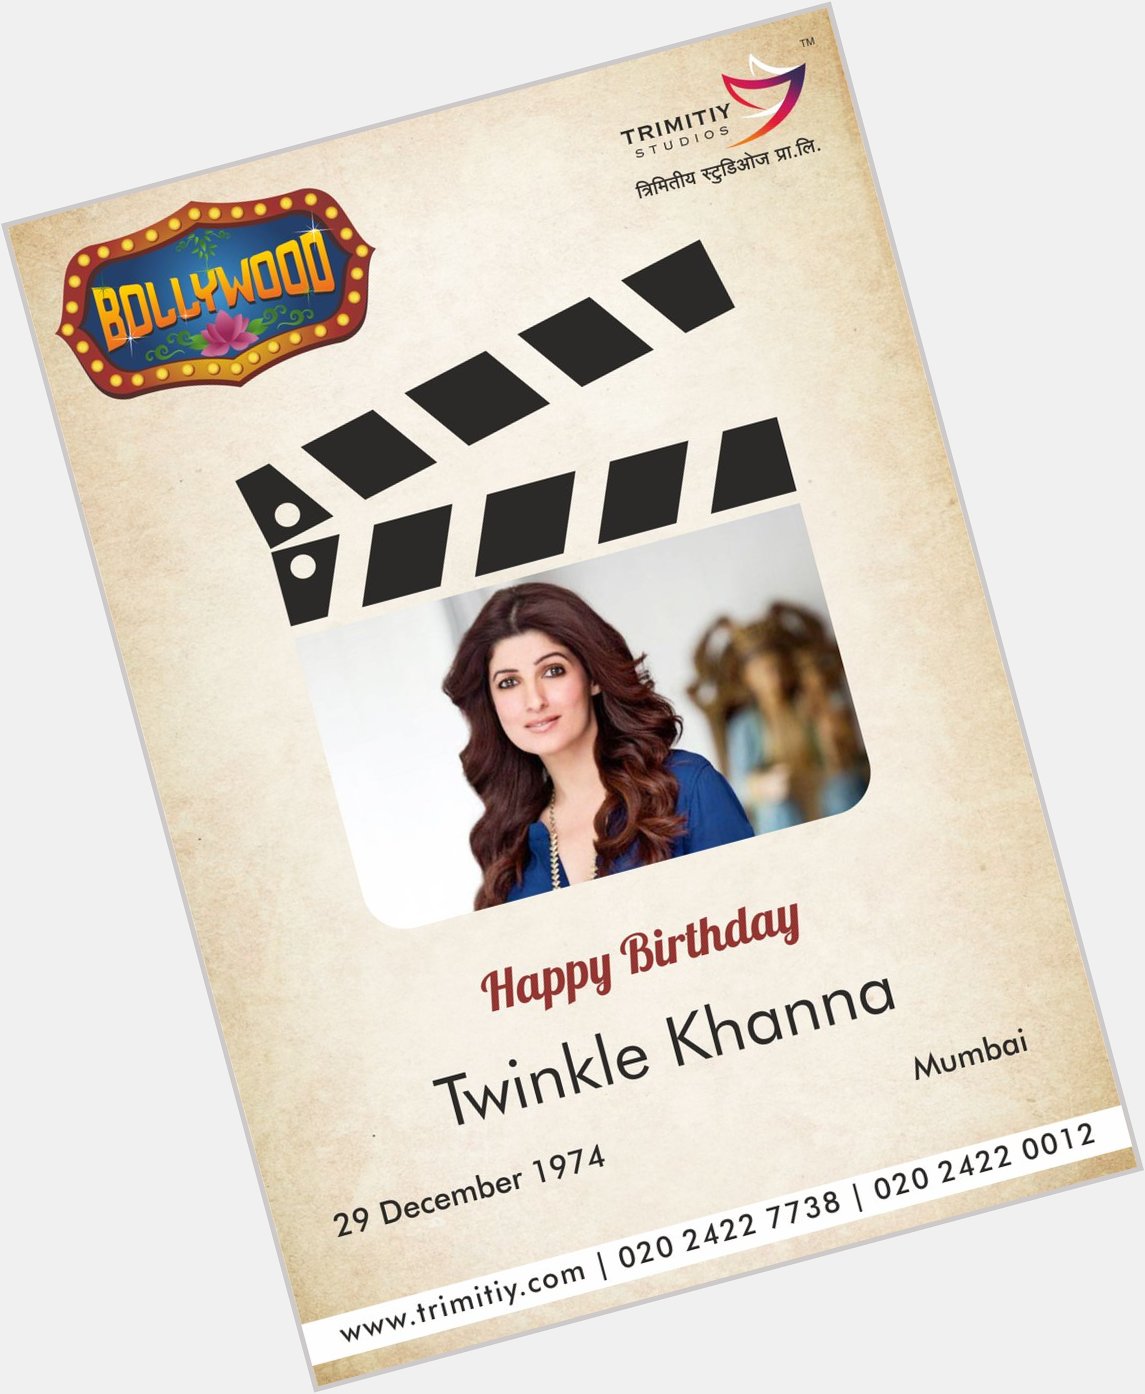 Happy Birthday to Twinkle Khanna...  